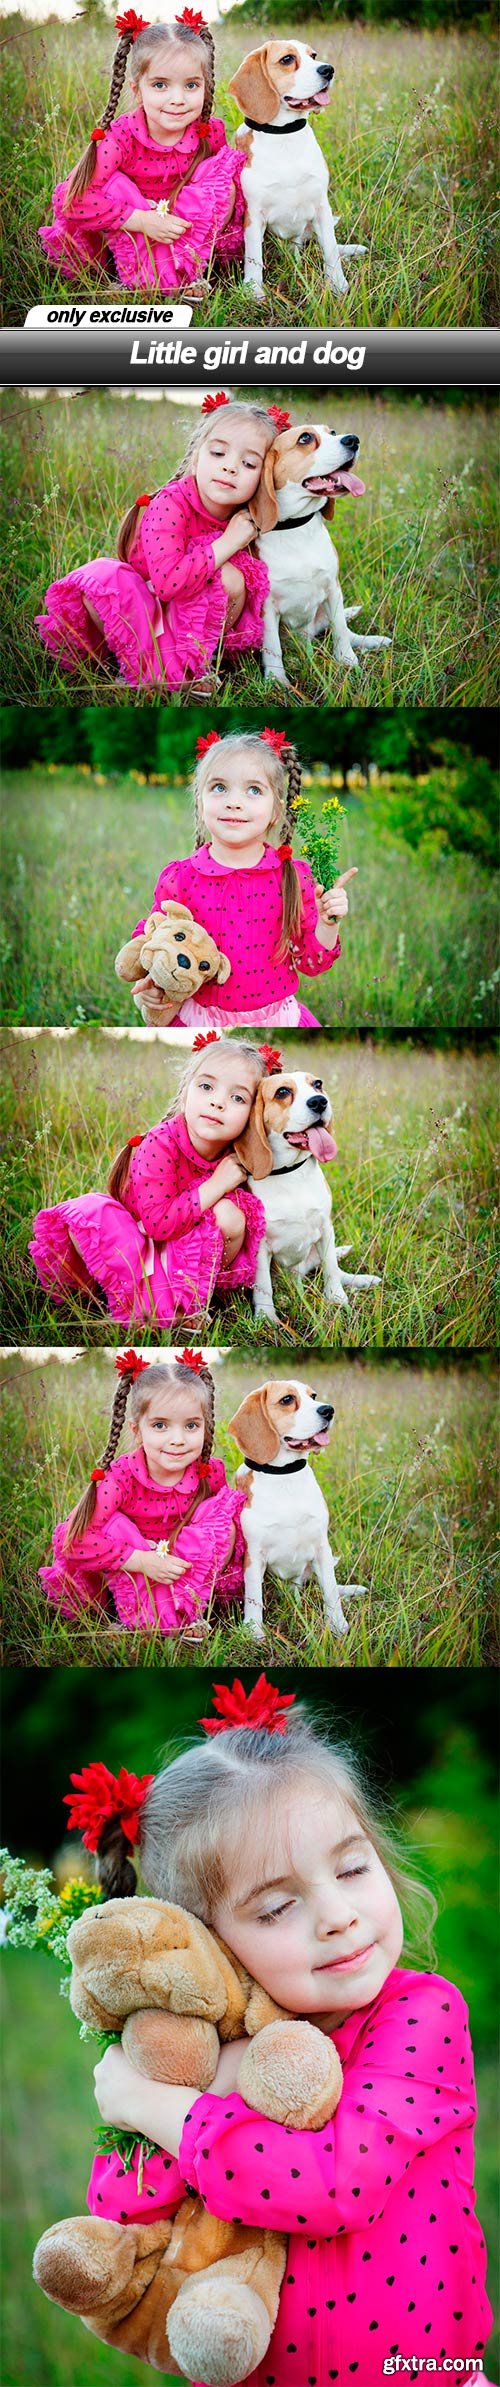 Little girl and dog - 5 UHQ JPEG